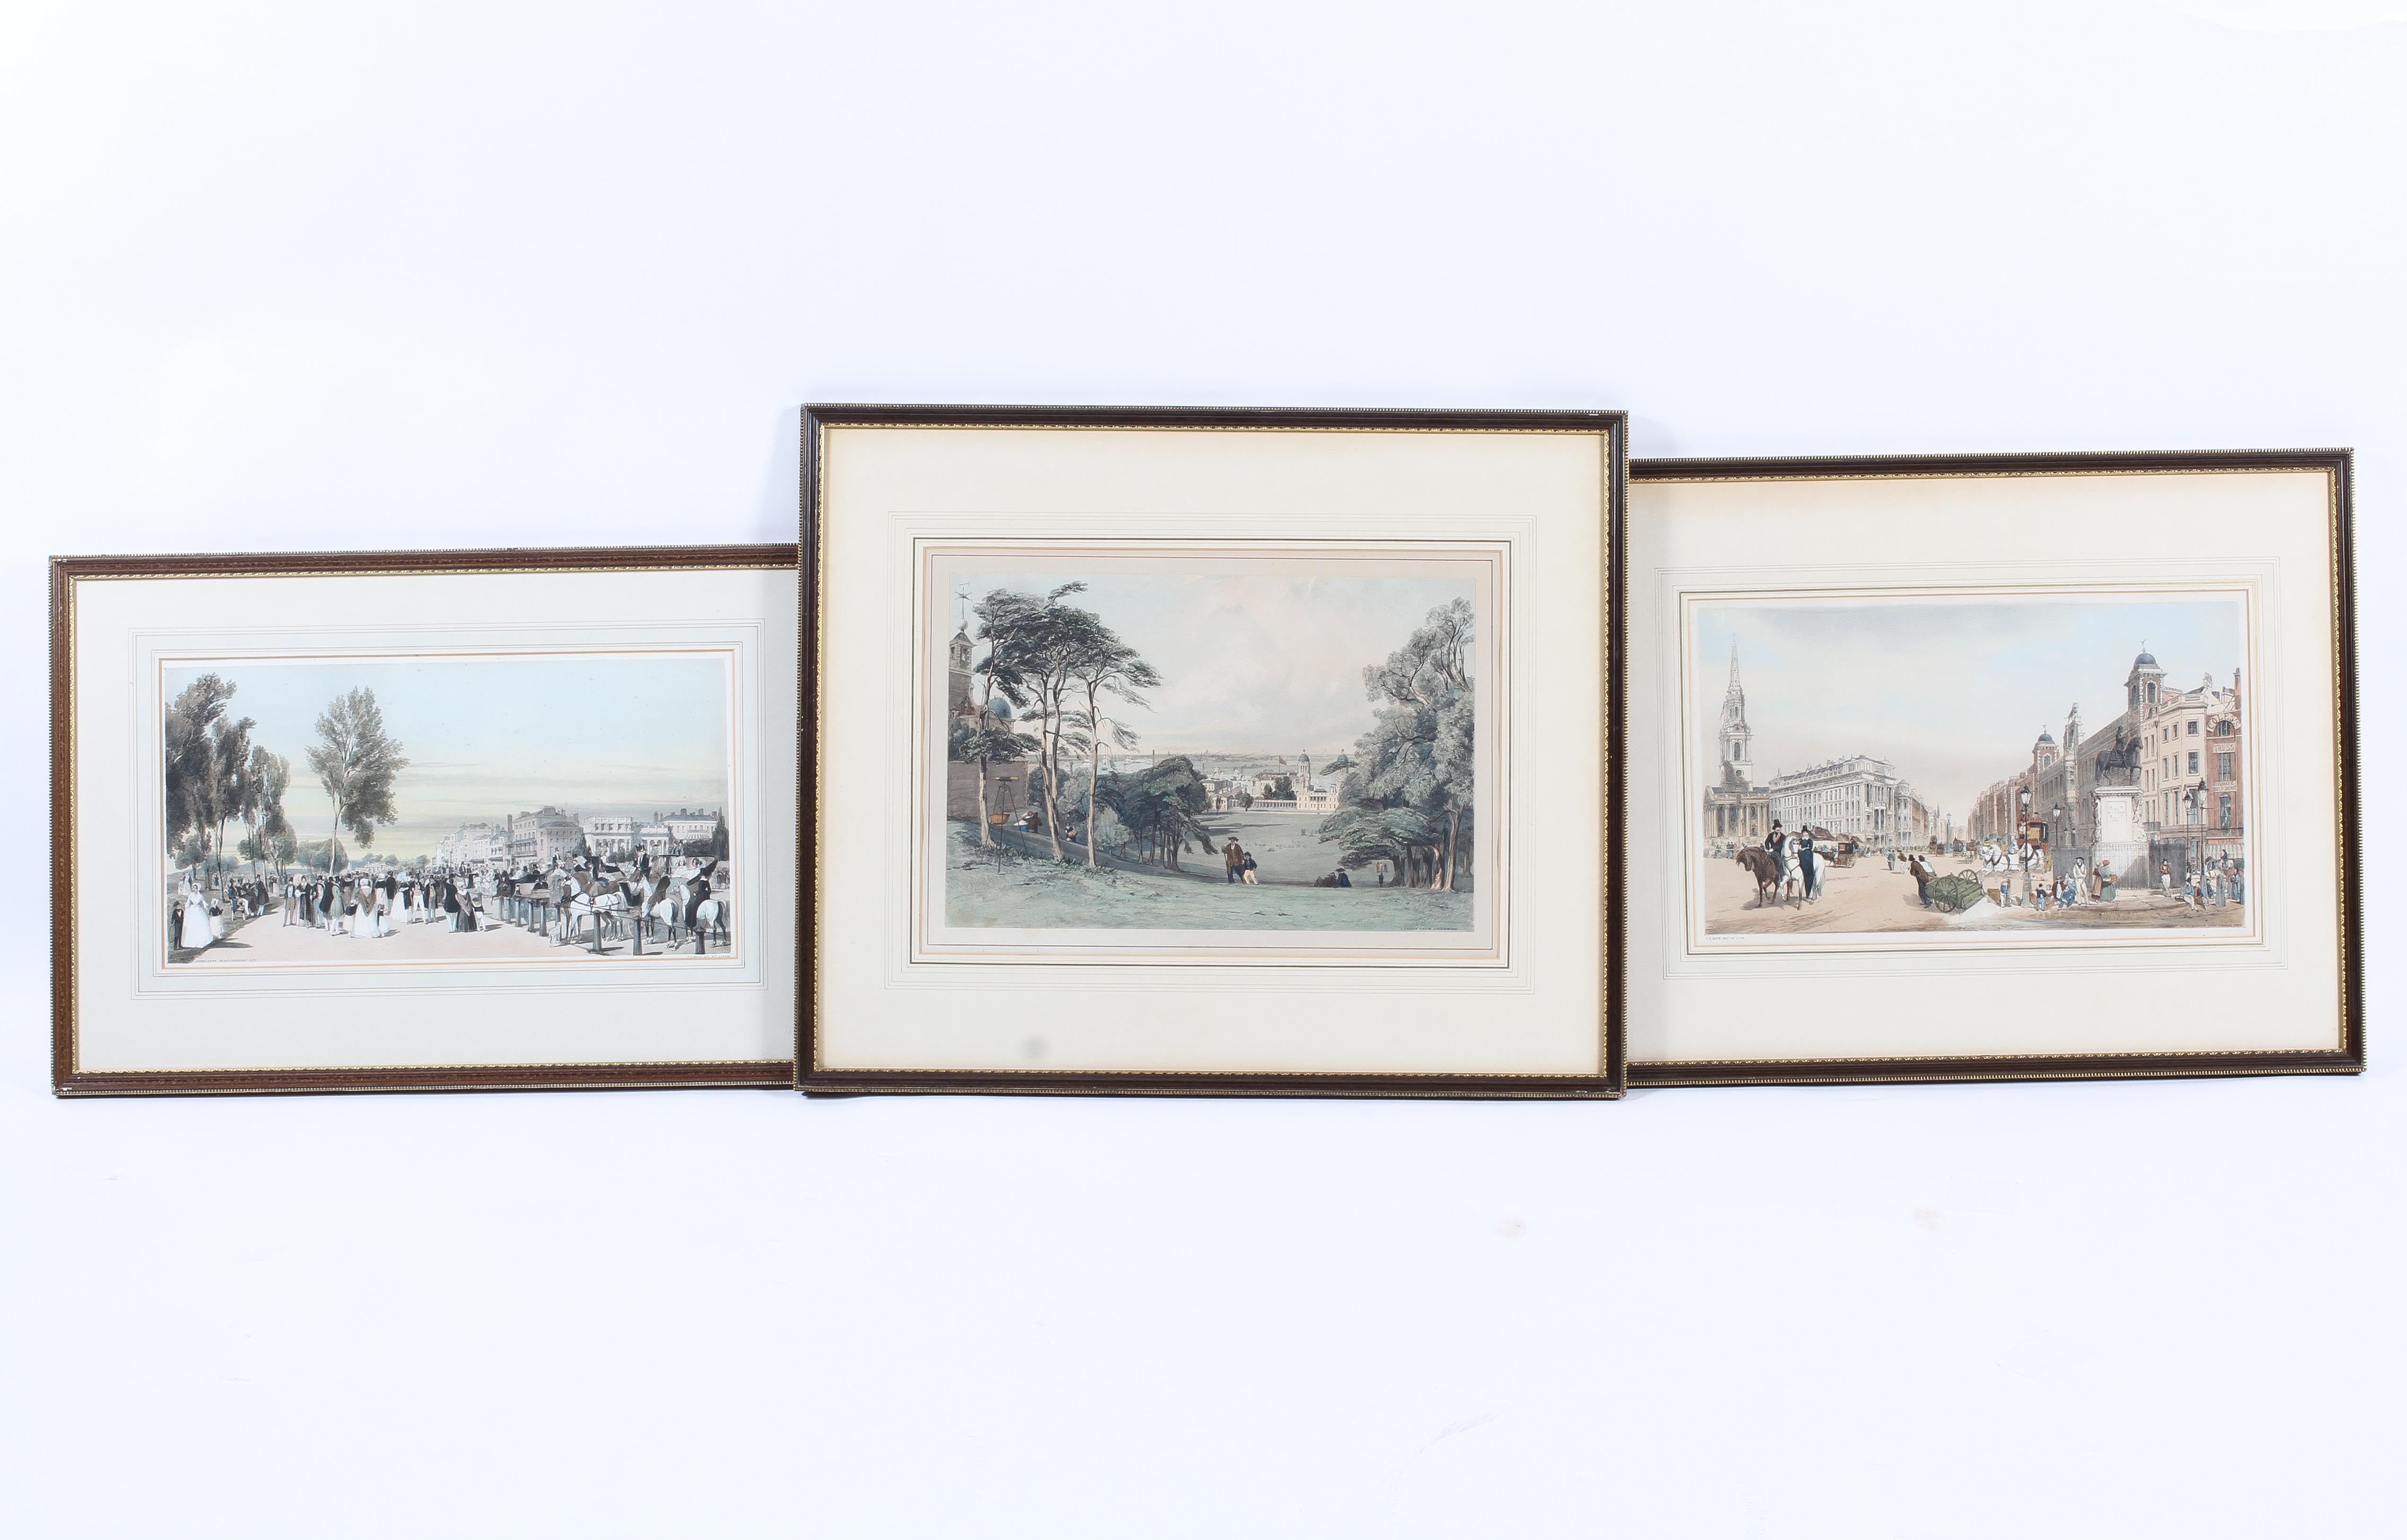 Thomas Shotter Boys (1803-1874), three hand coloured lithographs of views of London.